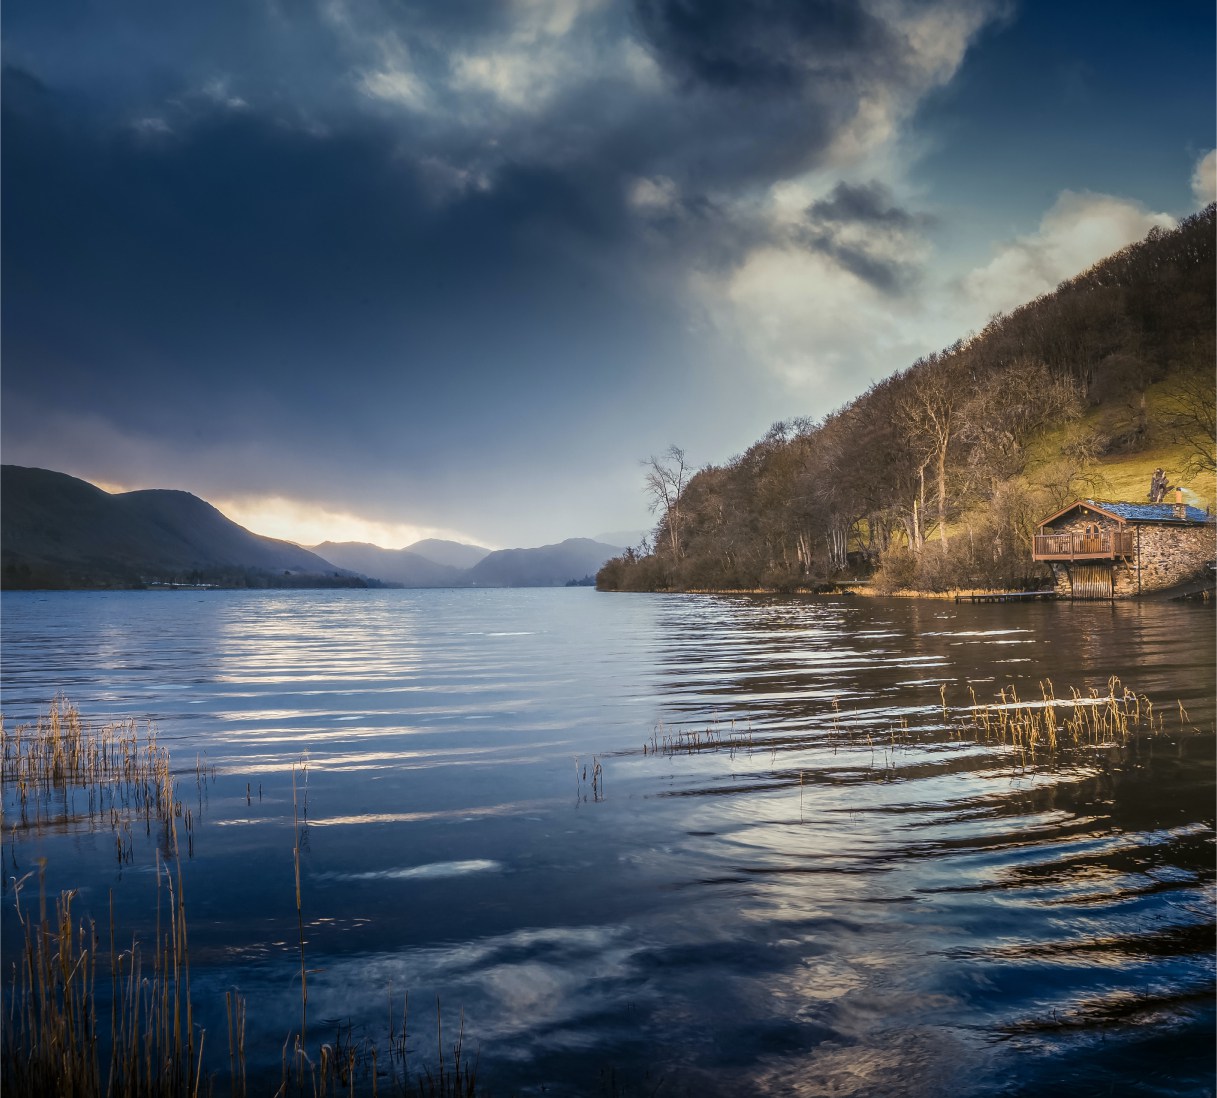 Ullswater, Lake District – Cumbria